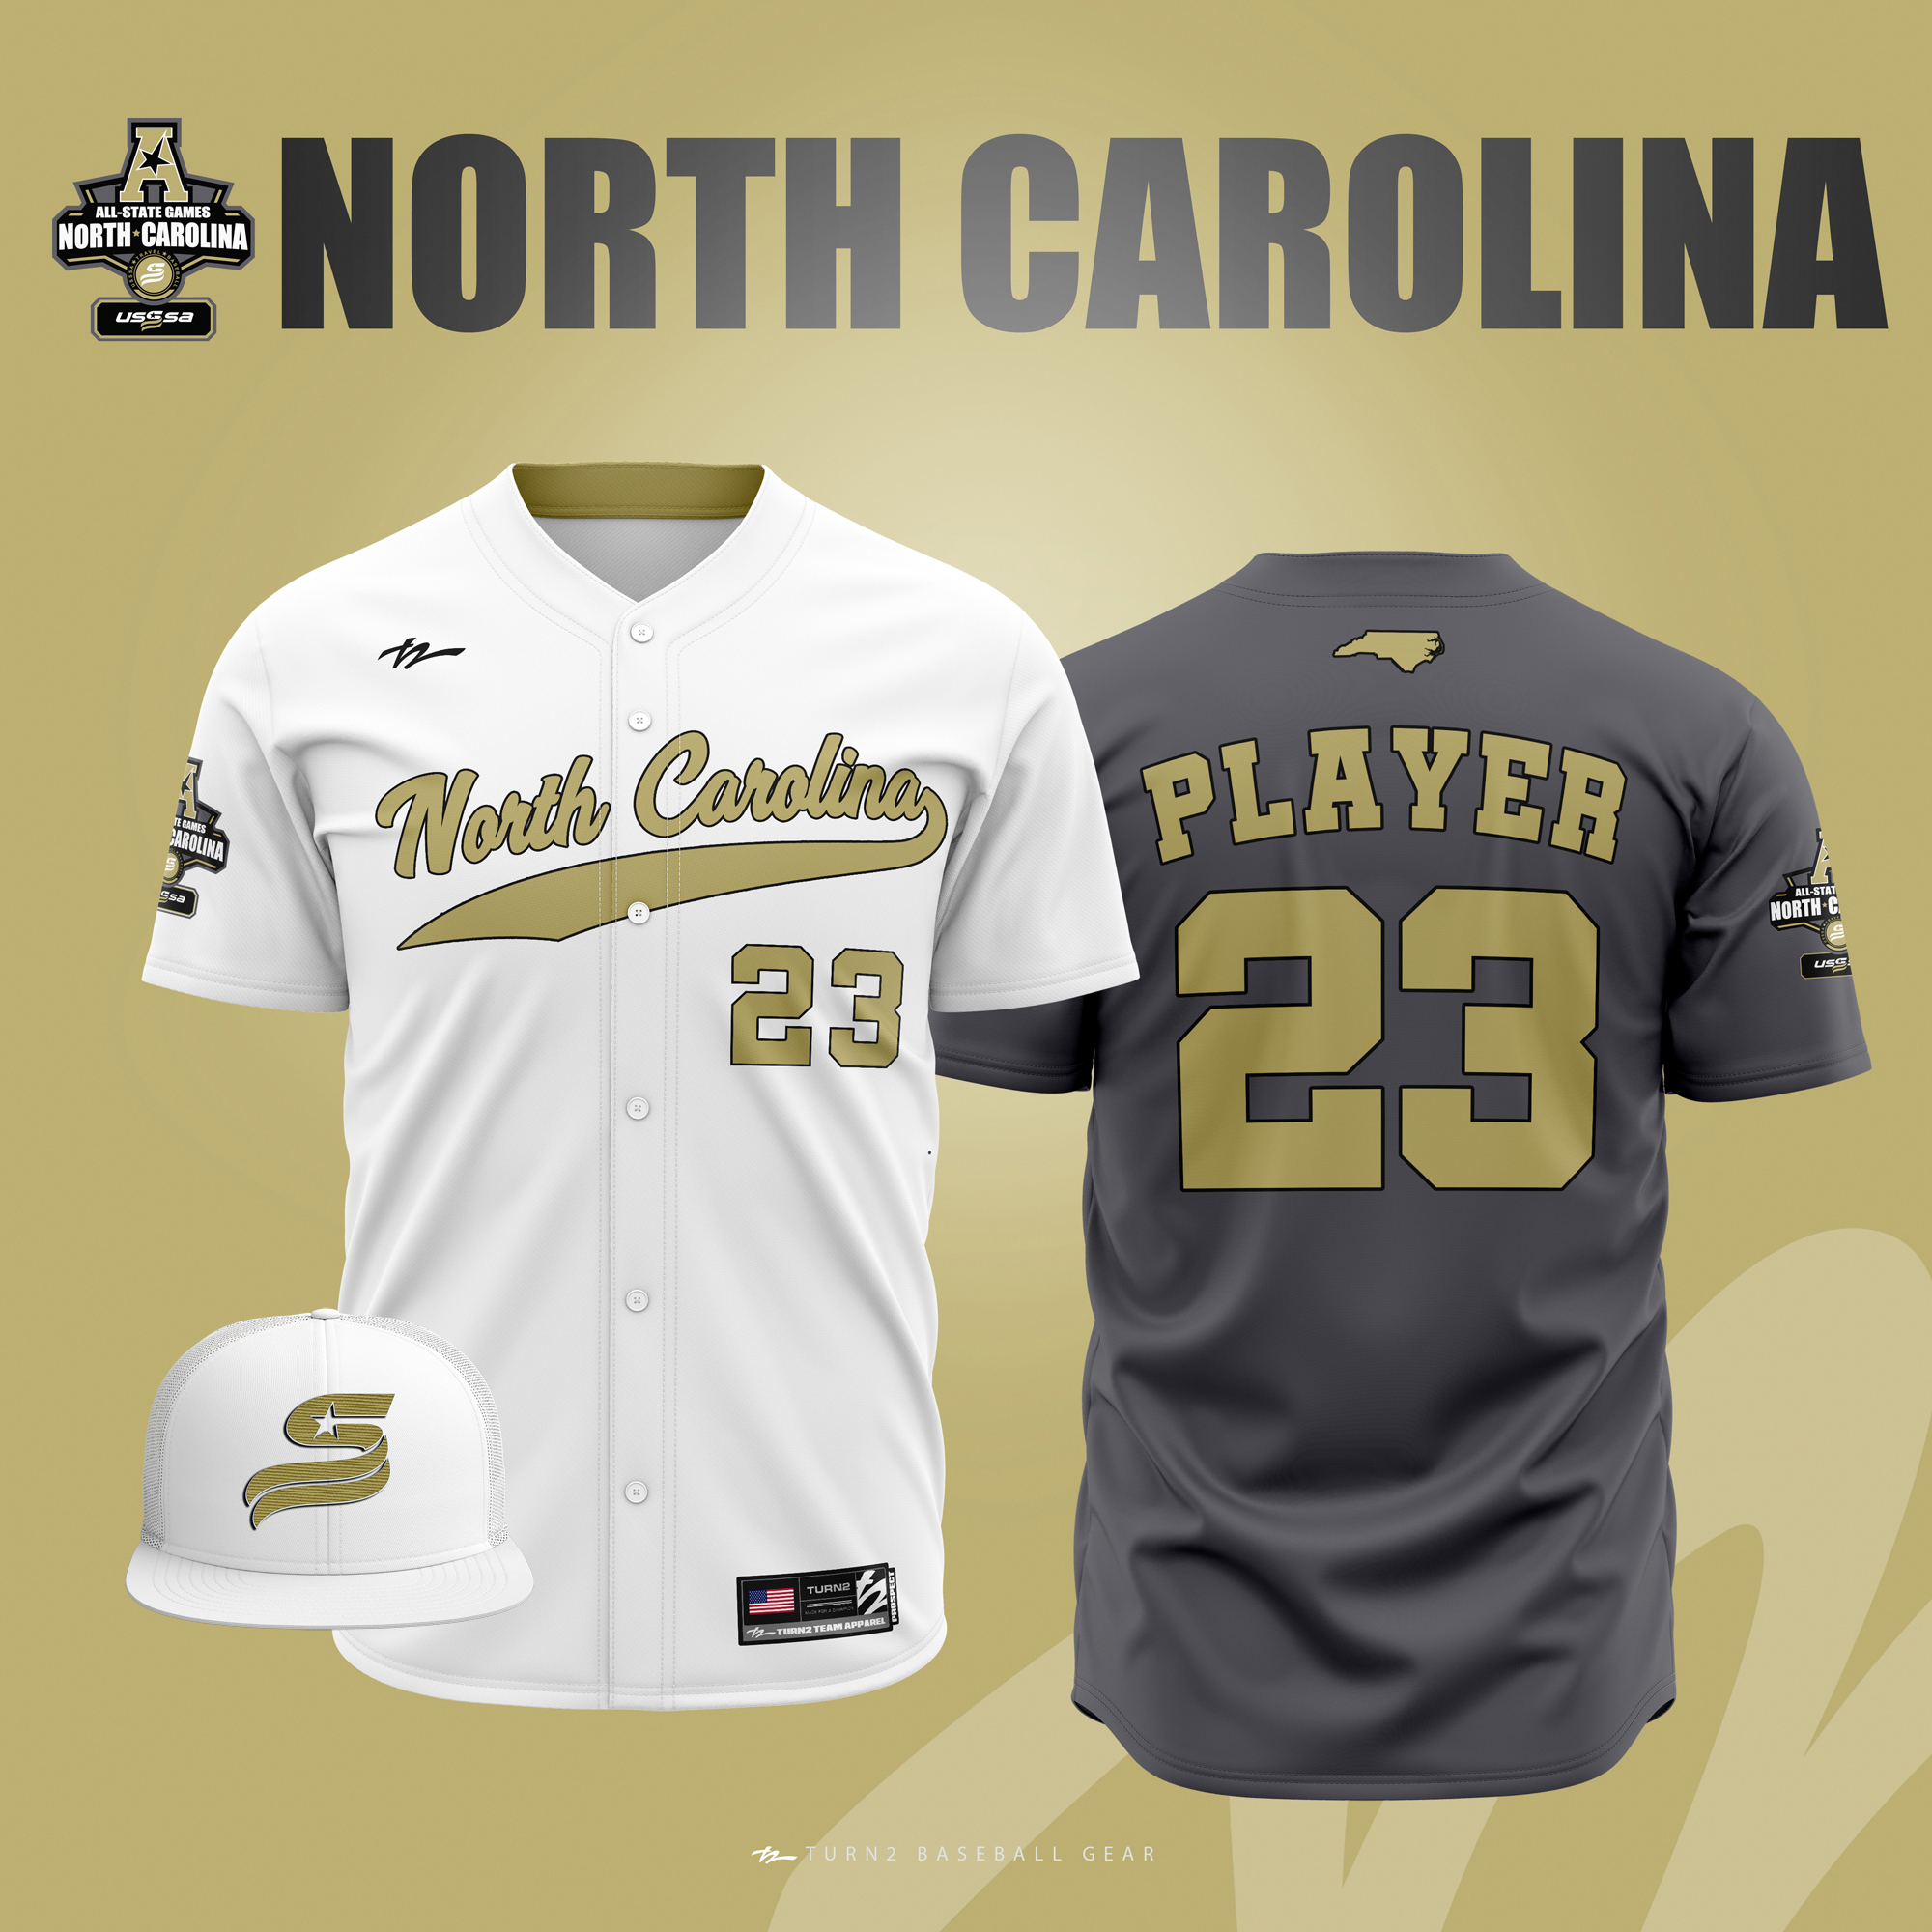 North Carolina Uniforms